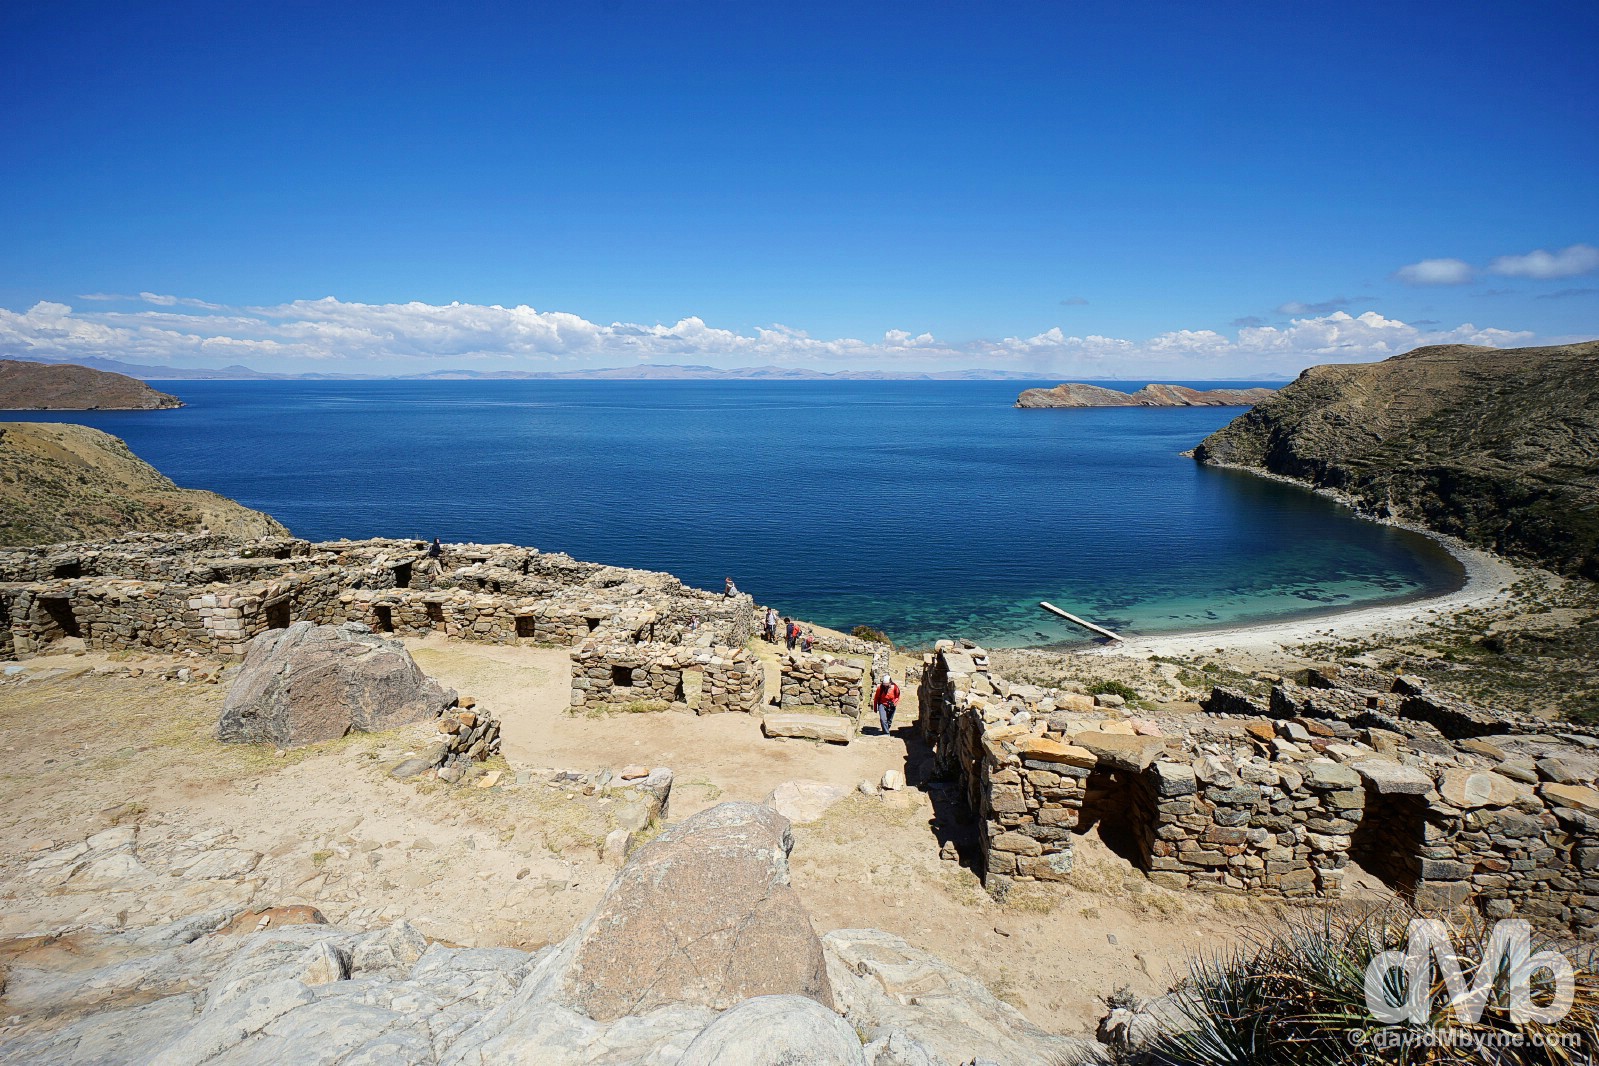 Inca ruins on Isla del Sol overlooking Lake Titicaca, Bolivia. August 24, 2015.